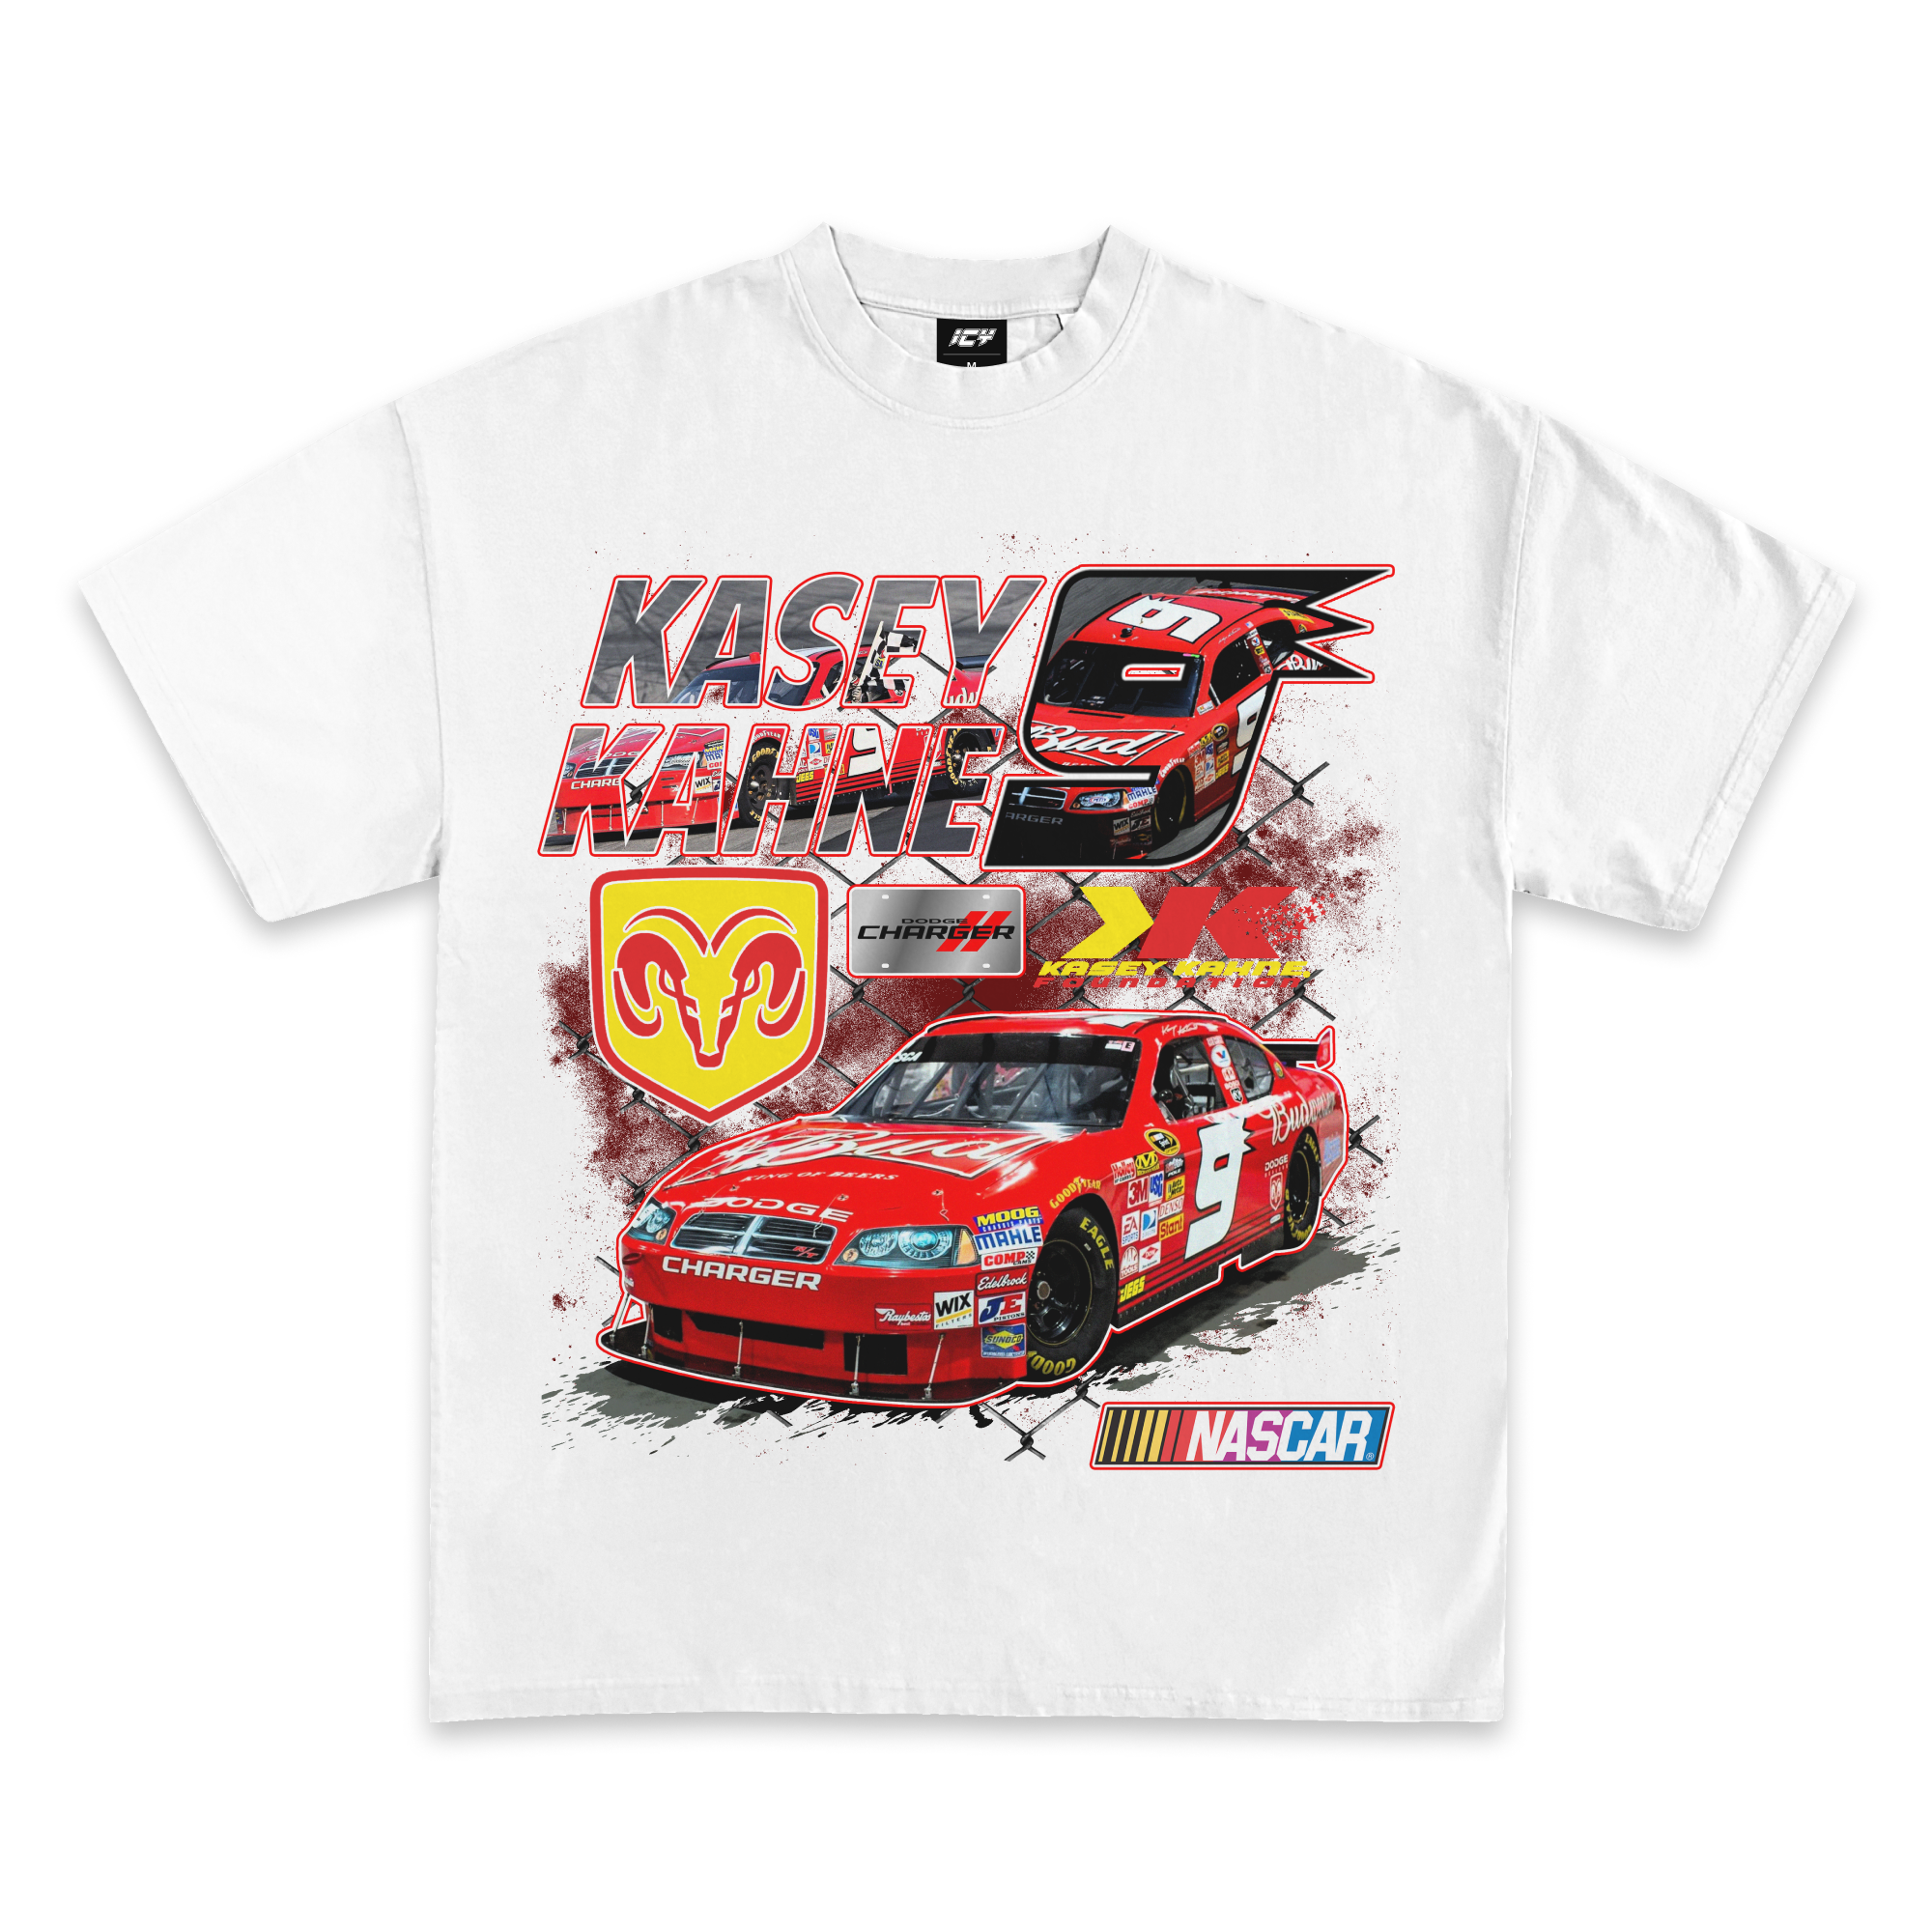 NASCAR Kasey Kahne Racing T-Shirt